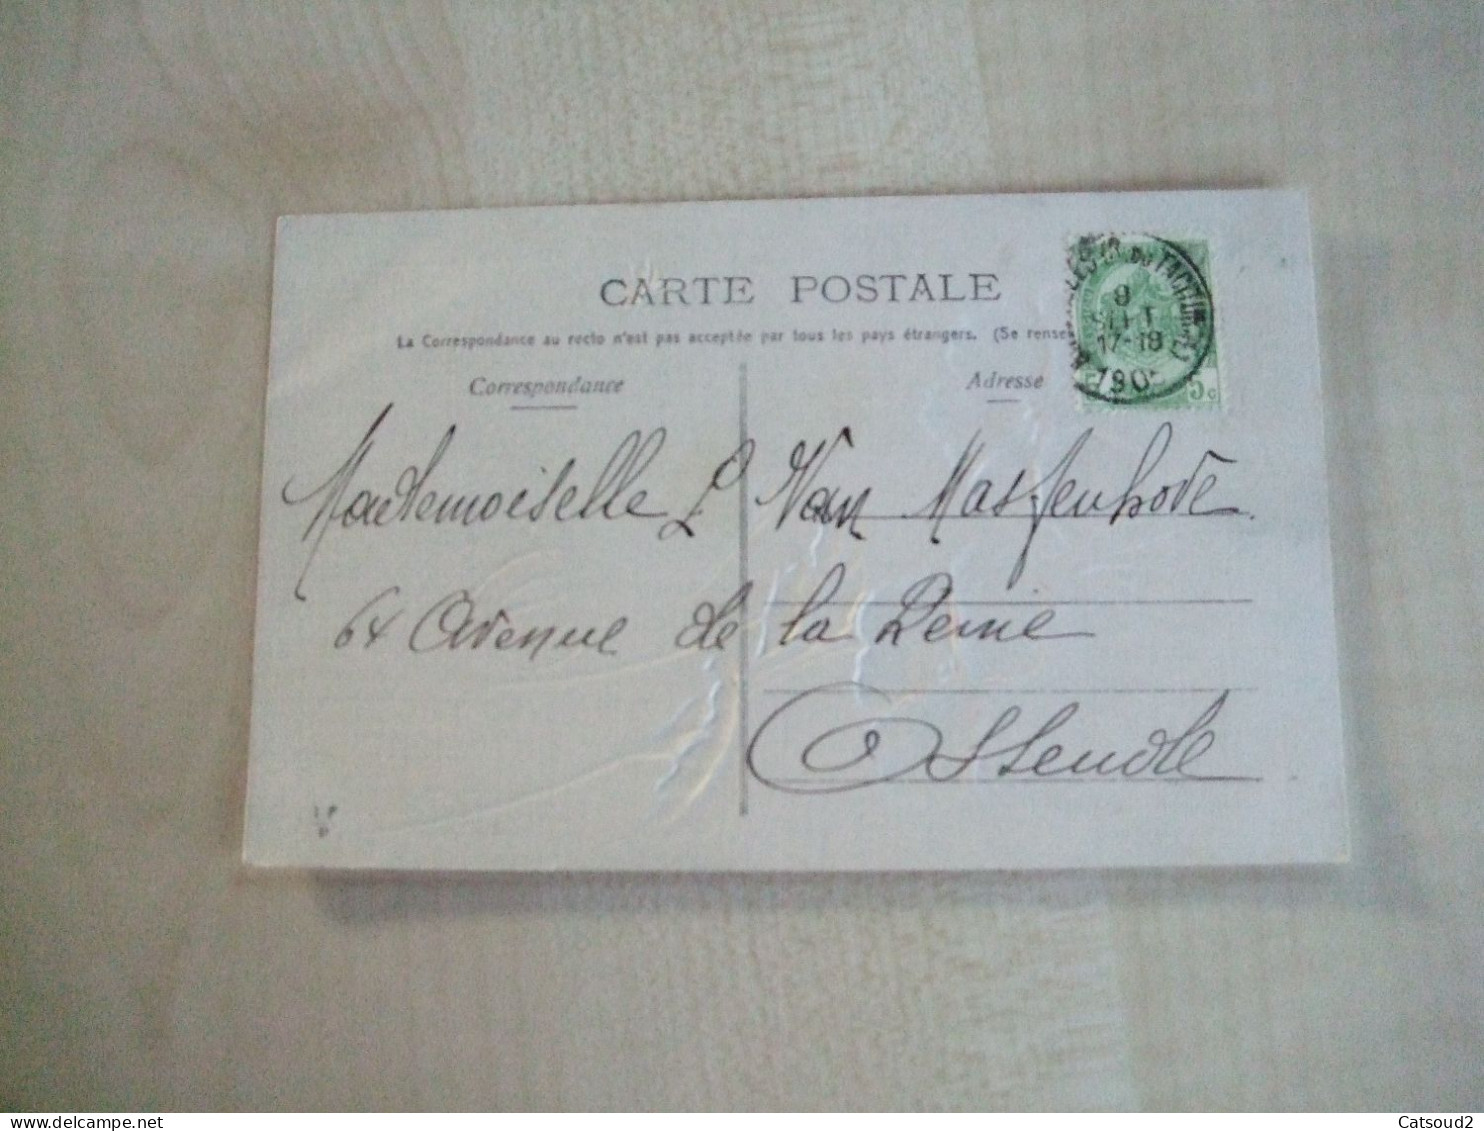 Carte Postale Ancienne Gaufrée PENSEES - Bloemen